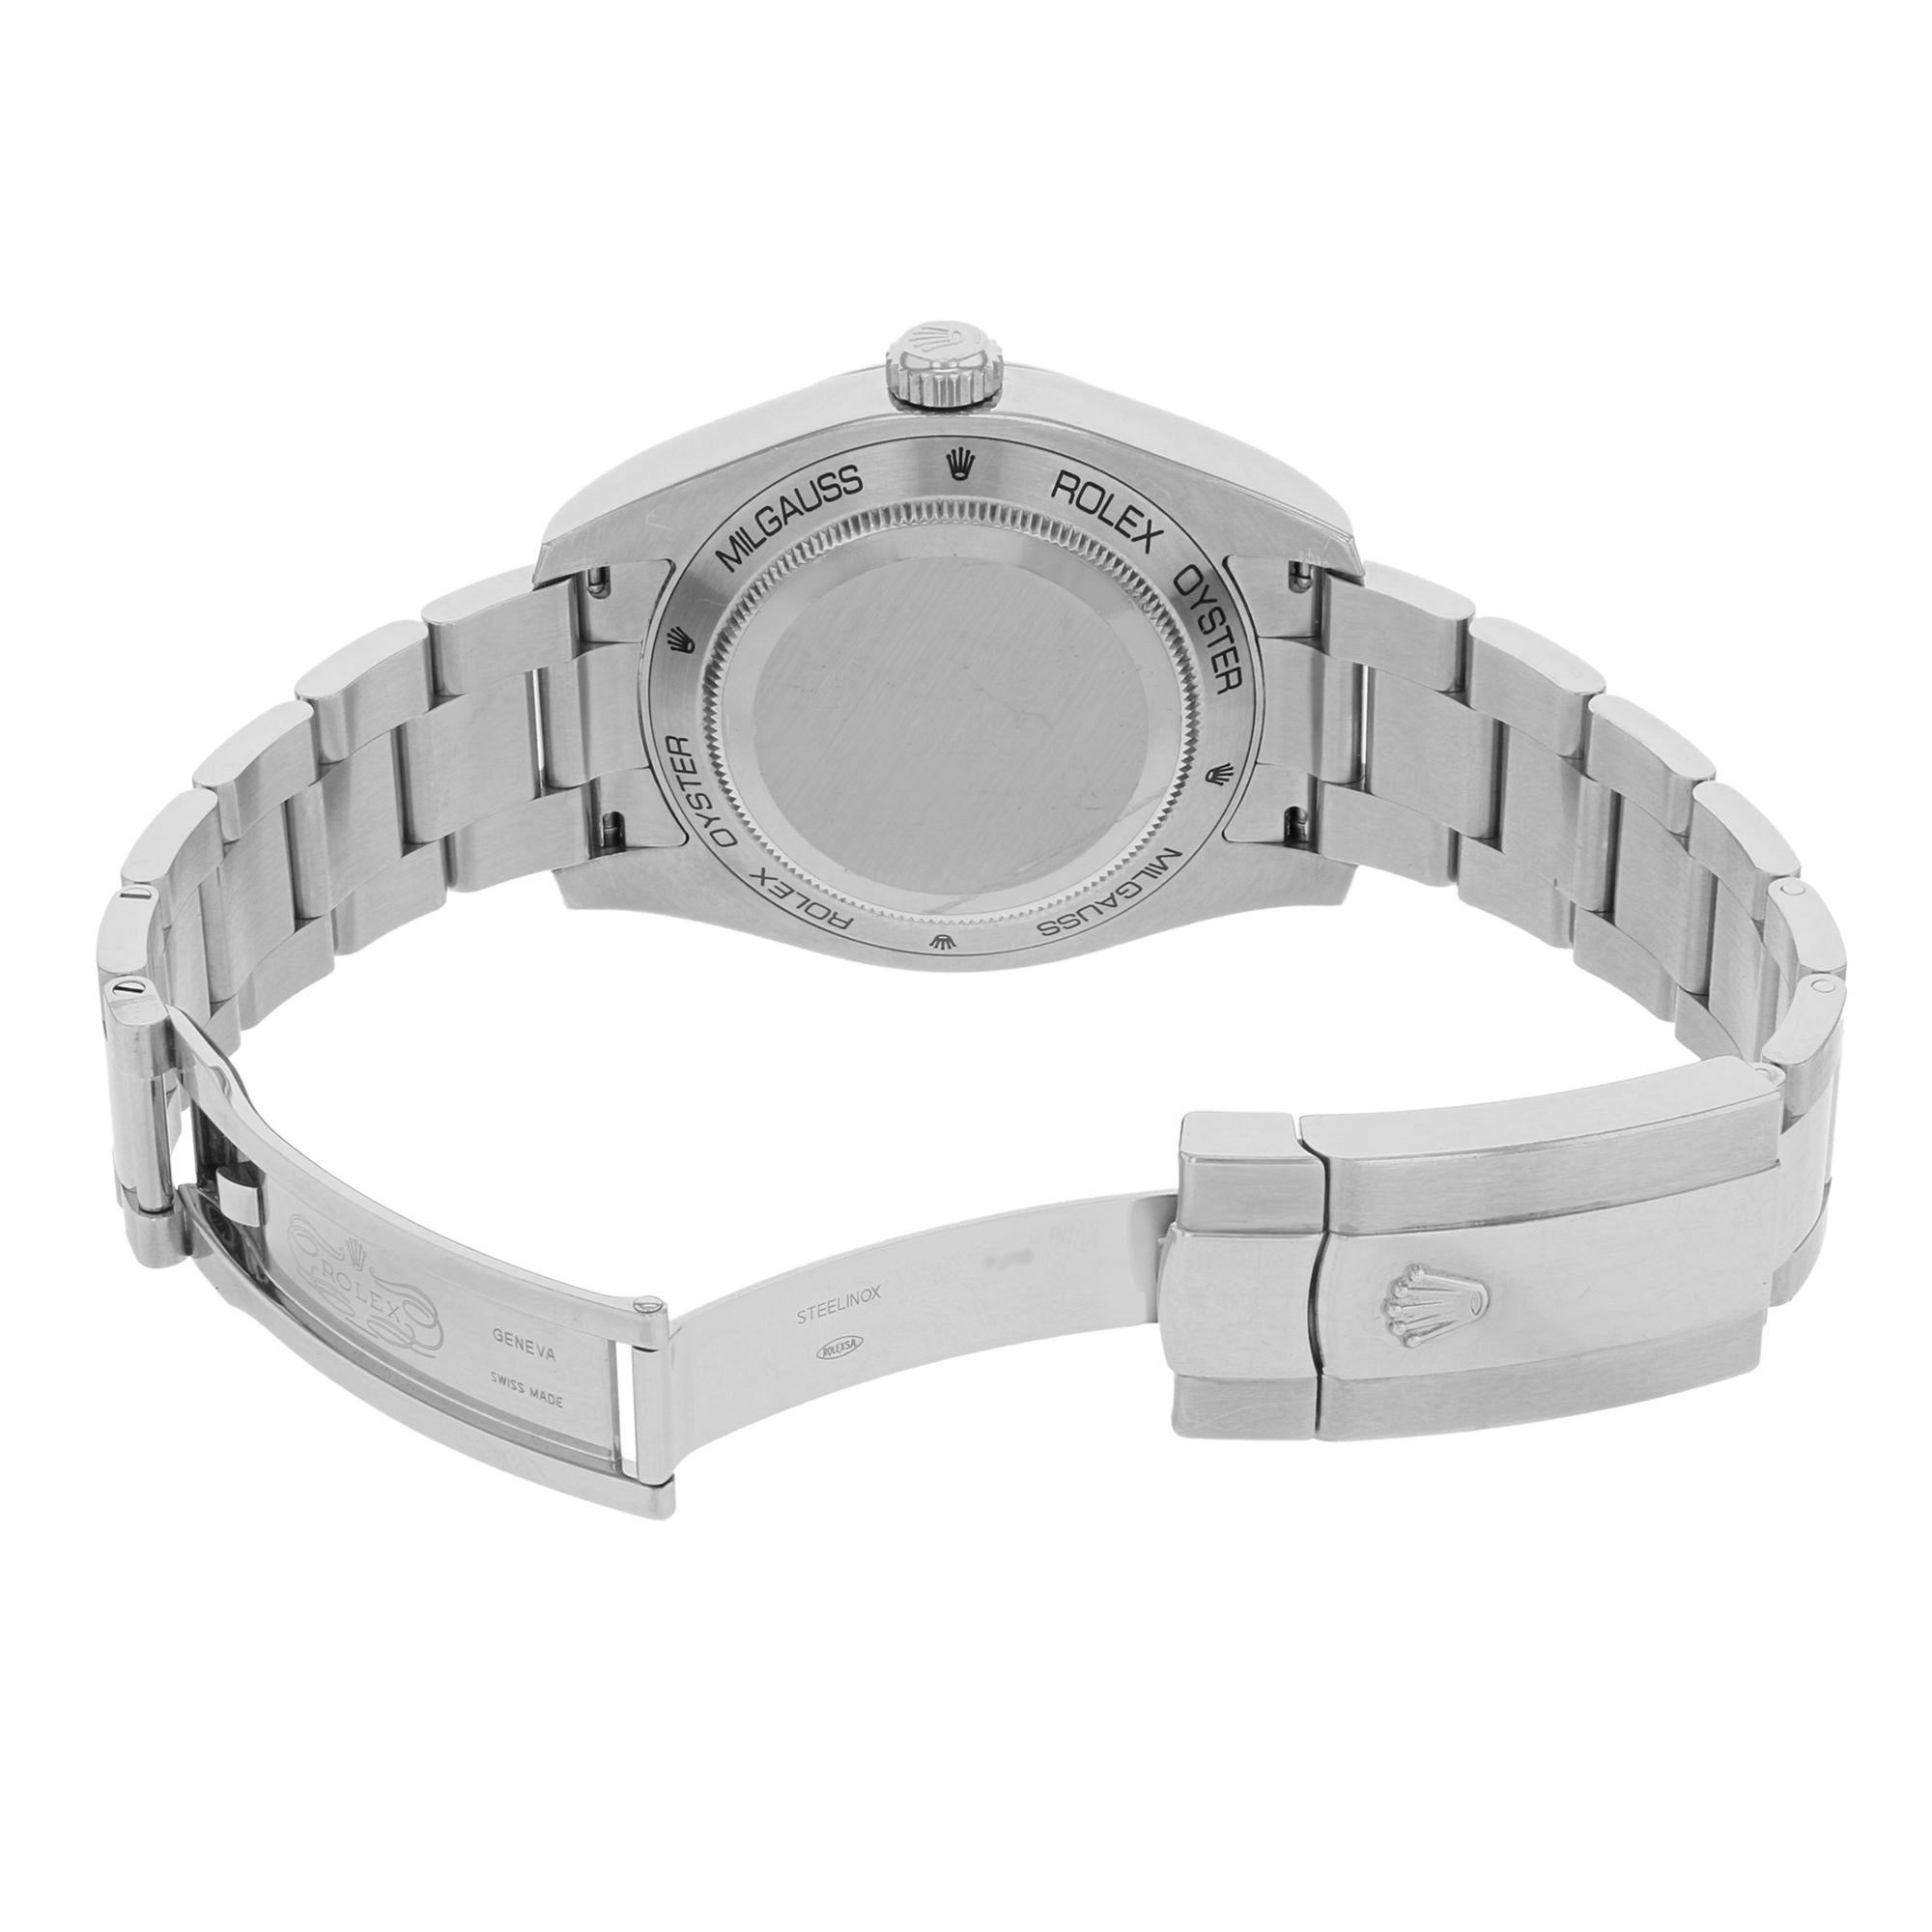 Rolex Milgauss Steel Black Dial Green Crystal Automatic Men's Watch 116400GV Bko 1